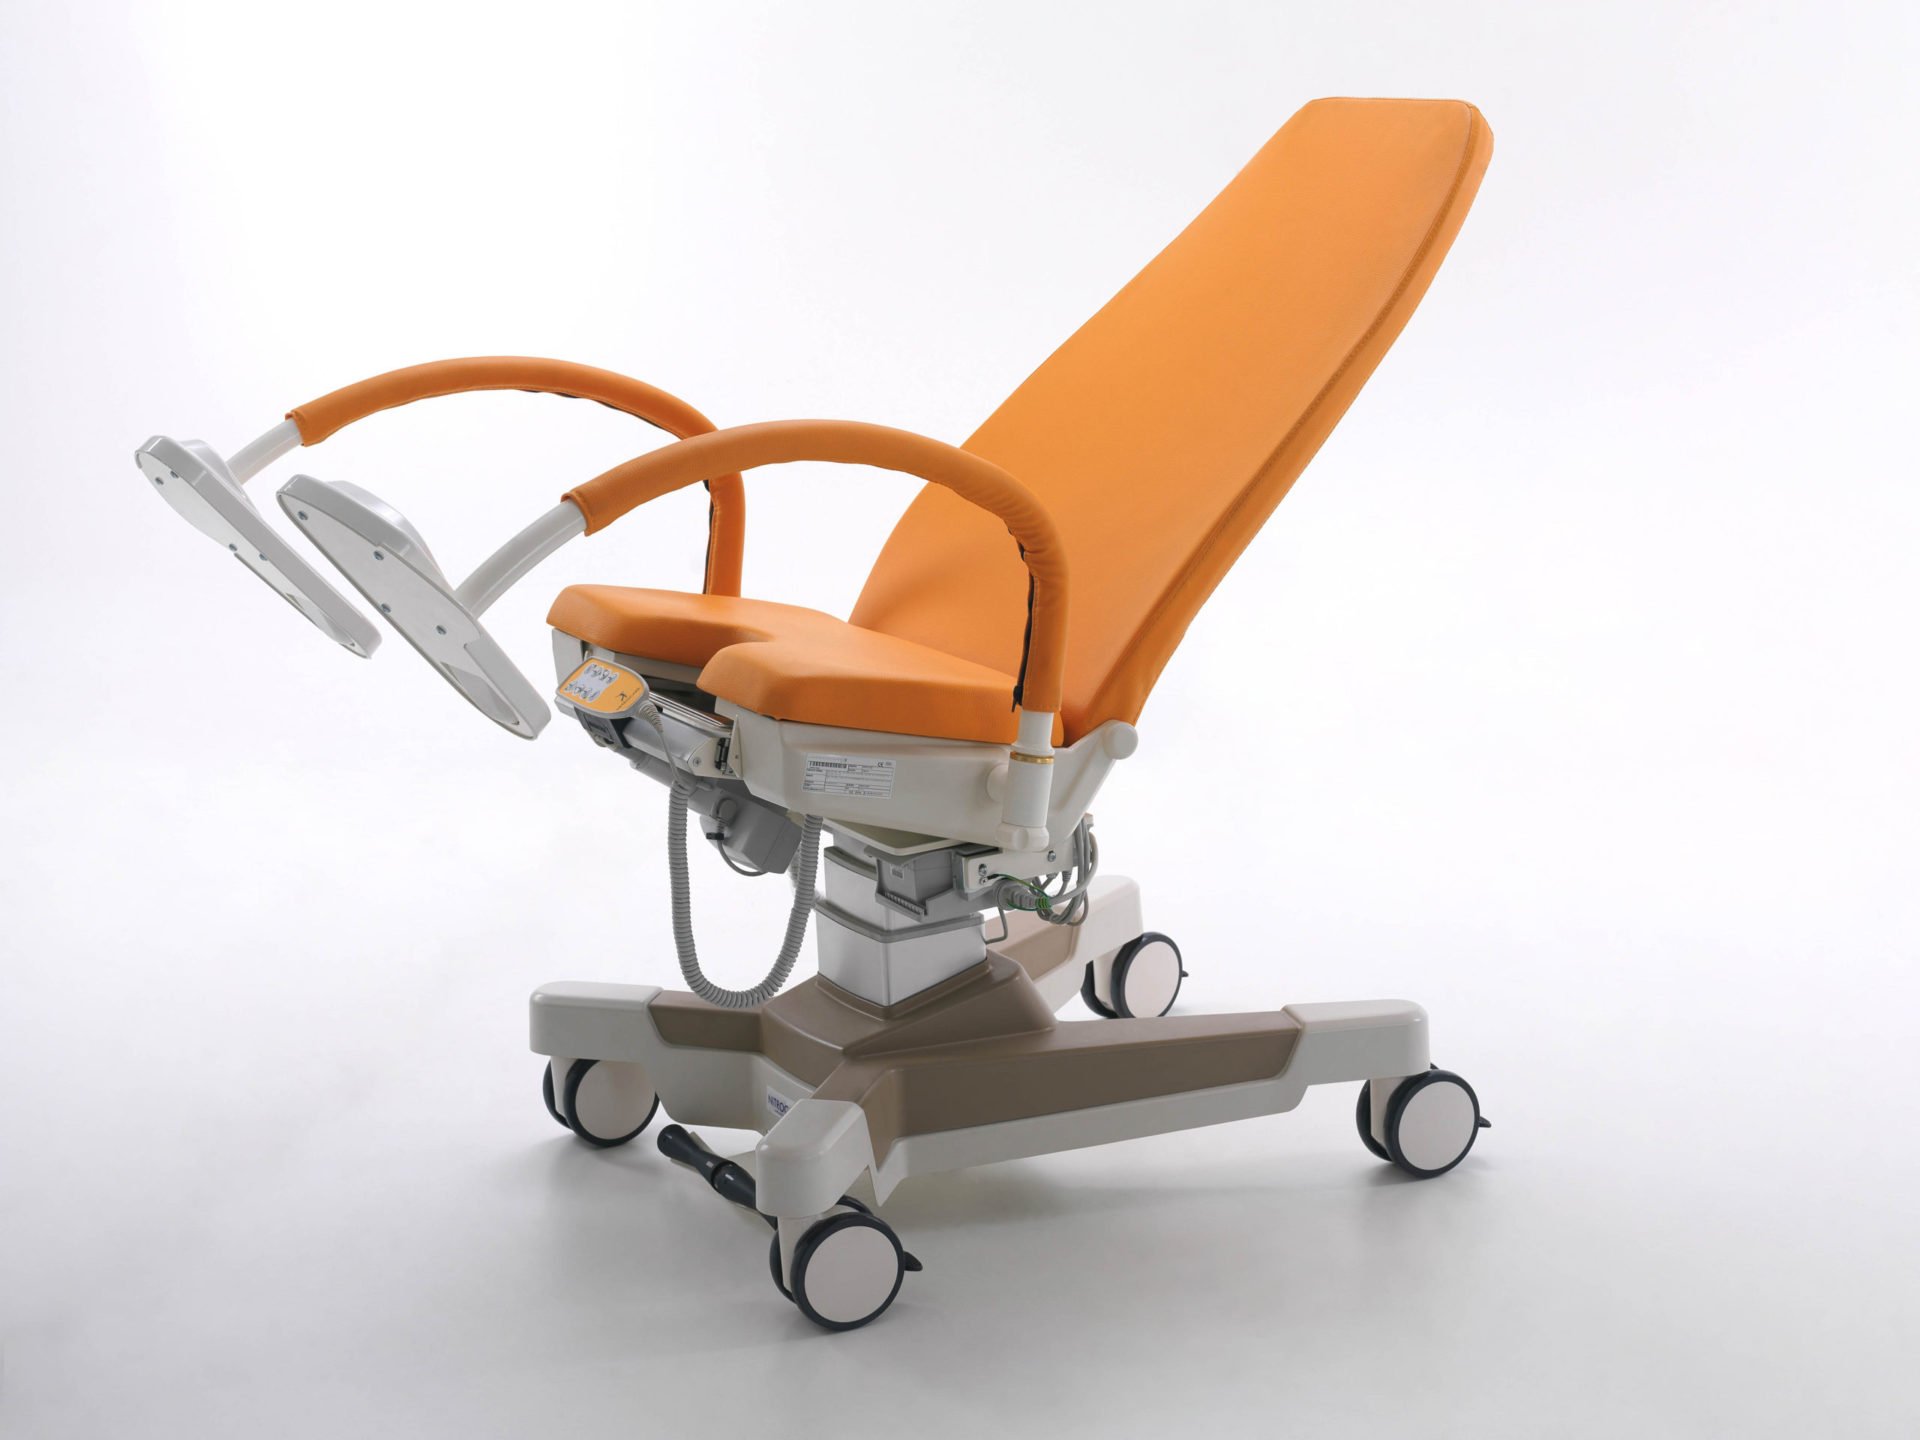 3 Motors Gynecological Examination Chair - Transfer Trolley